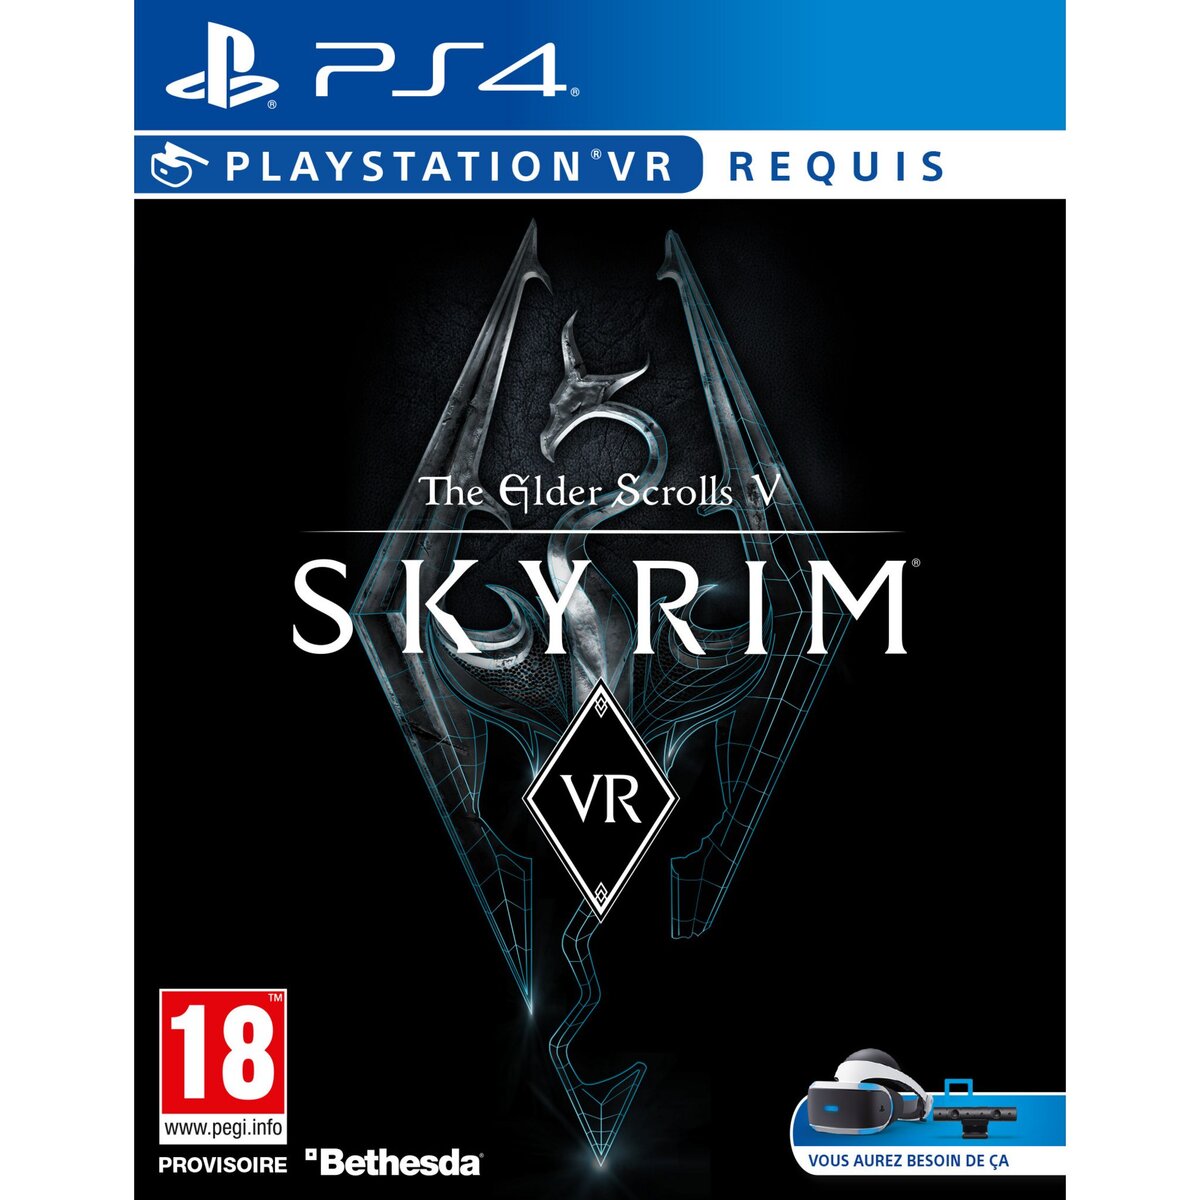 The Elder Scrolls V : Skyrim VR PS4 VR